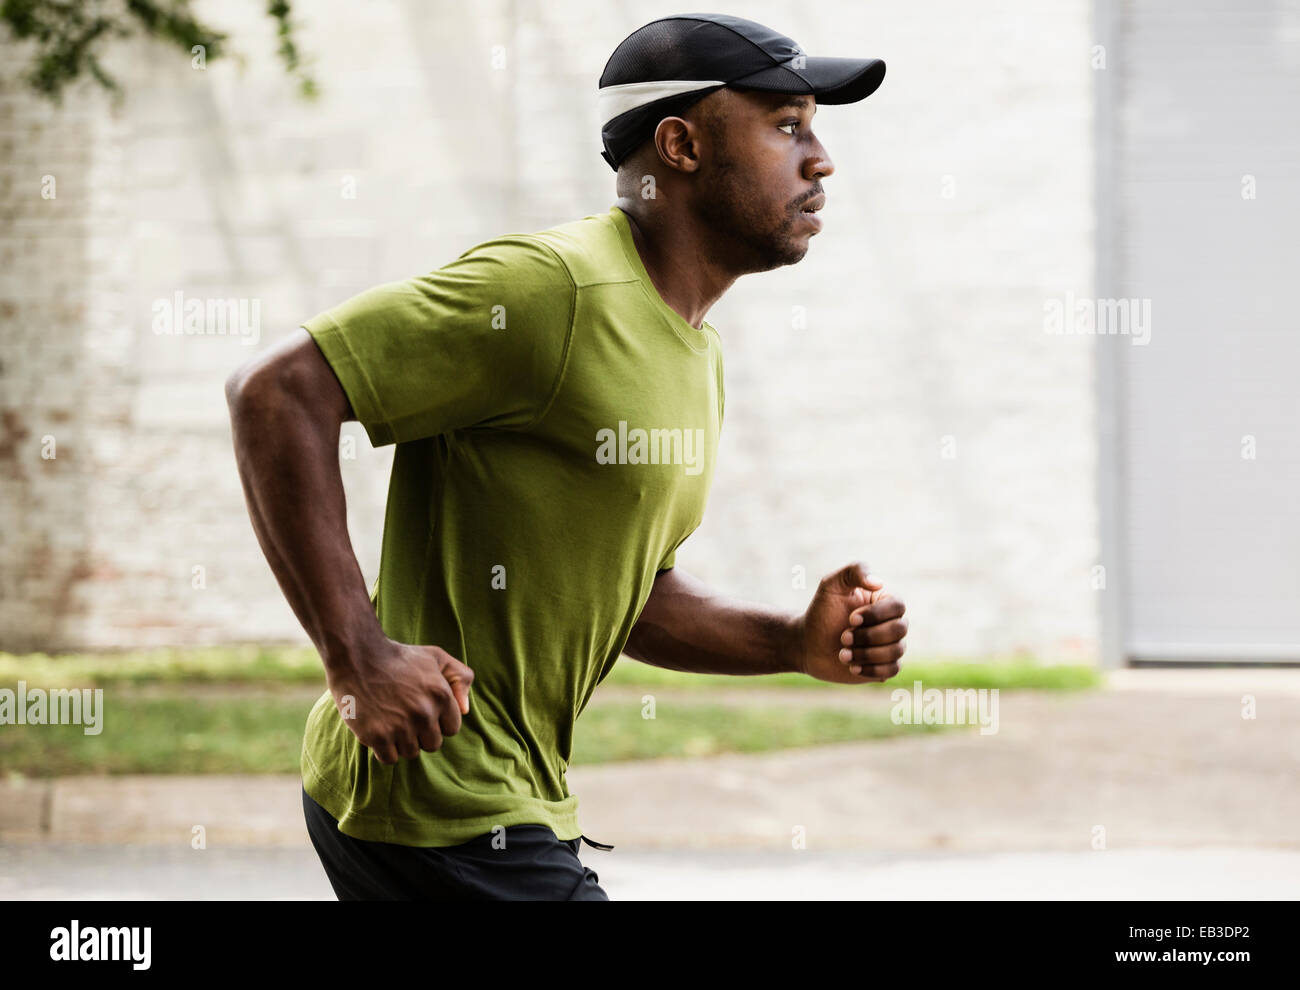 Black man running on city street Banque D'Images